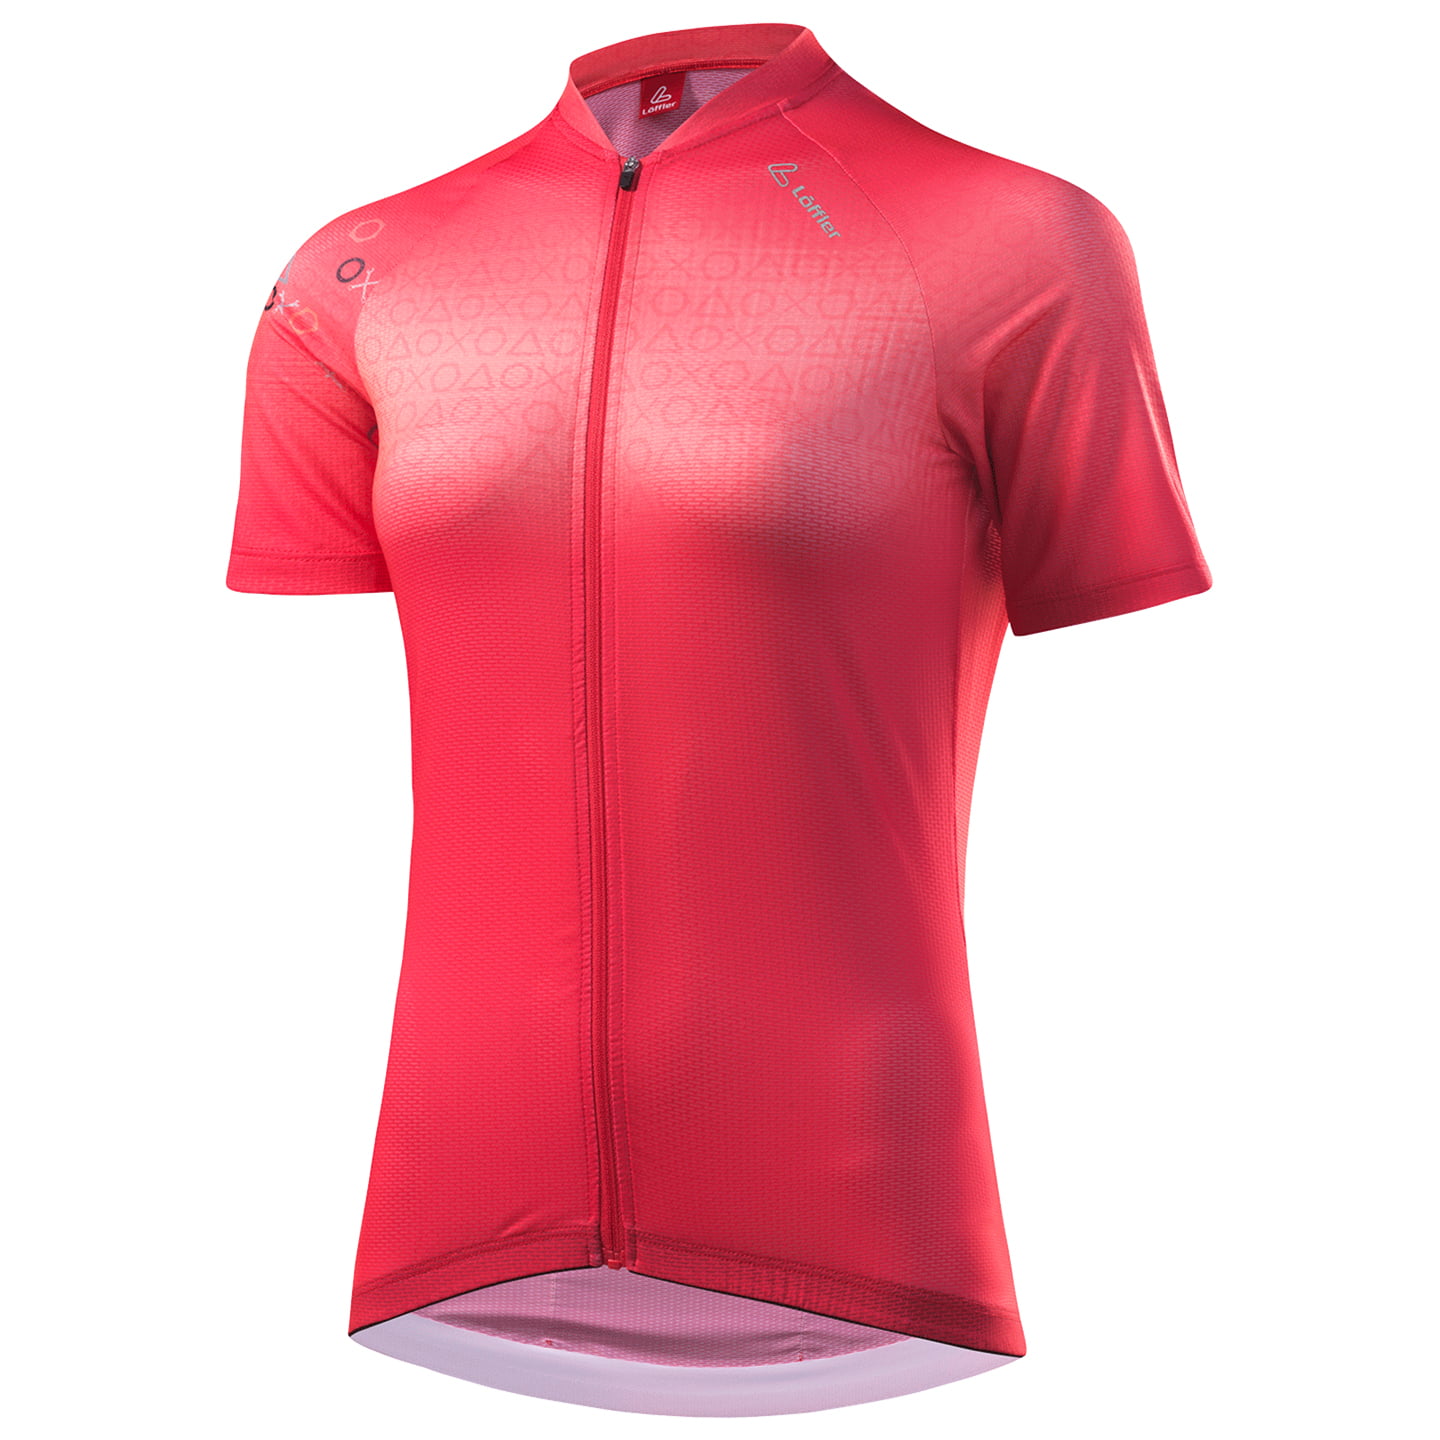 LOFFLER Axo Vent Women’s Jersey Women’s Short Sleeve Jersey, size 40, Cycle shirt, Bike clothing